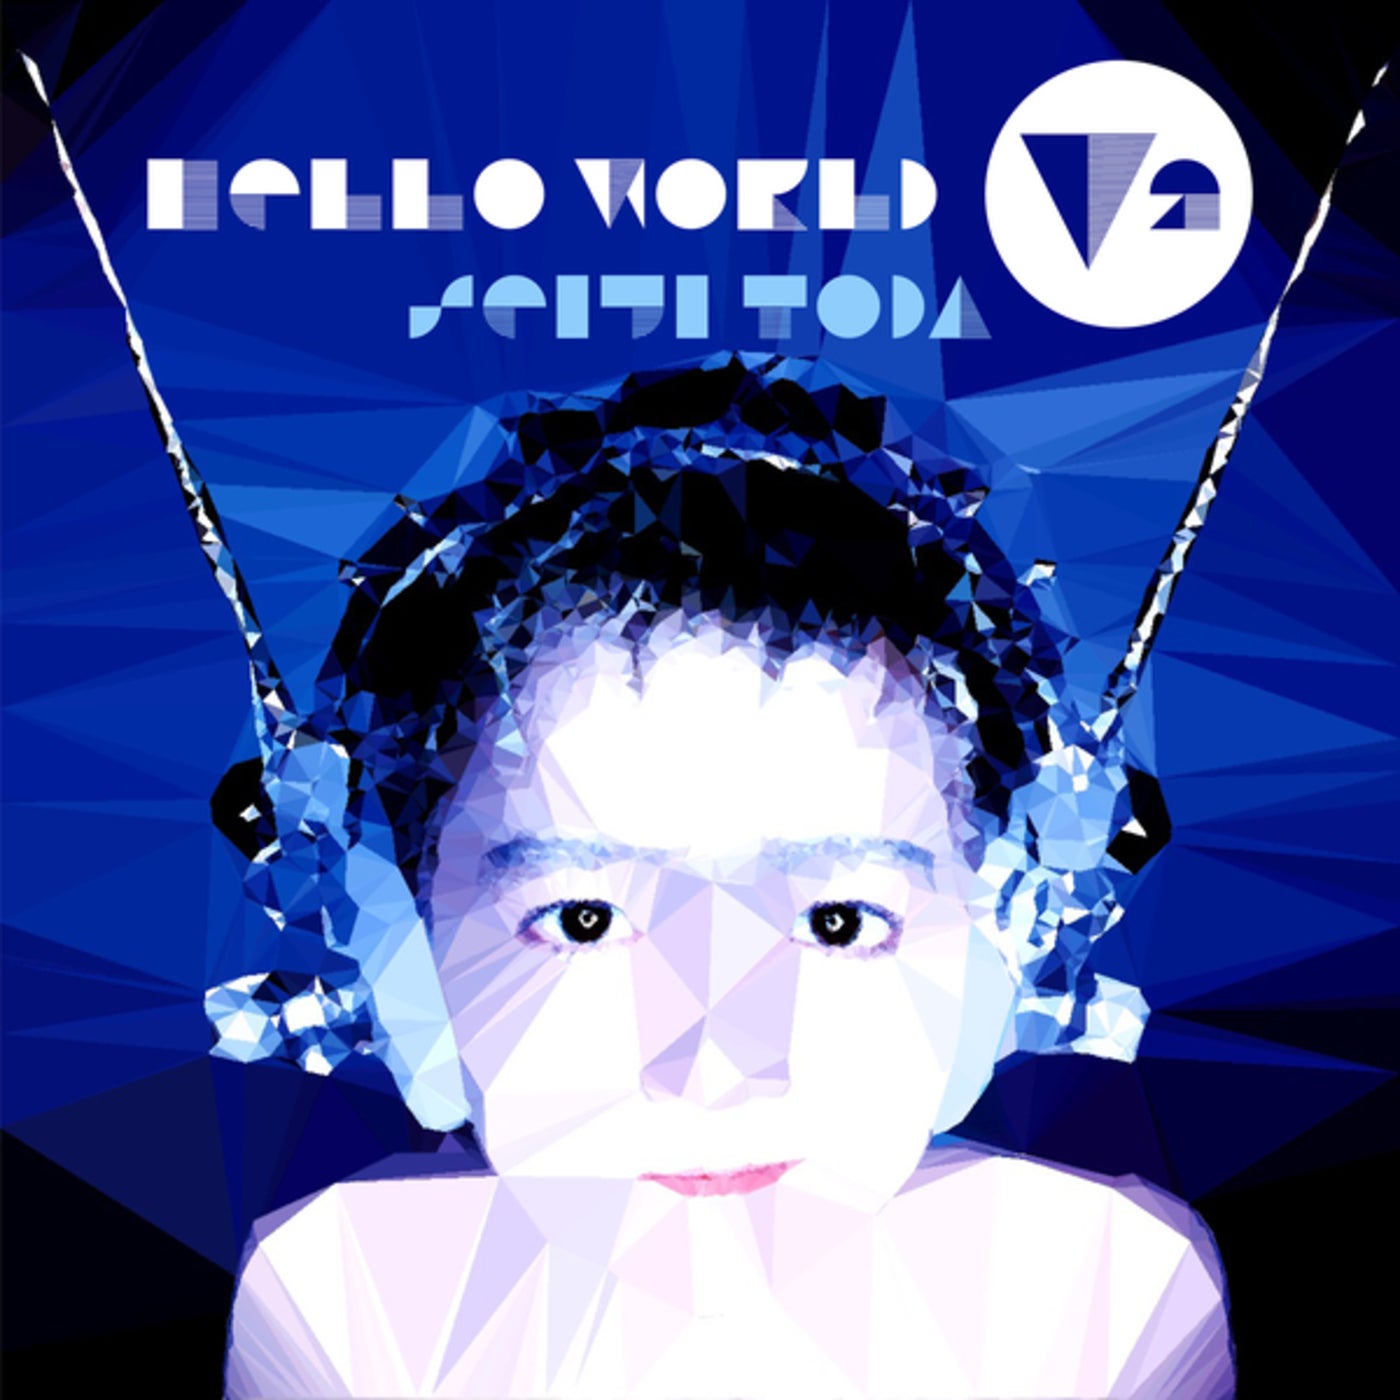 HELLO WORLD V2 by Seiji Toda and Yasuaki Shimizu on Beatsource